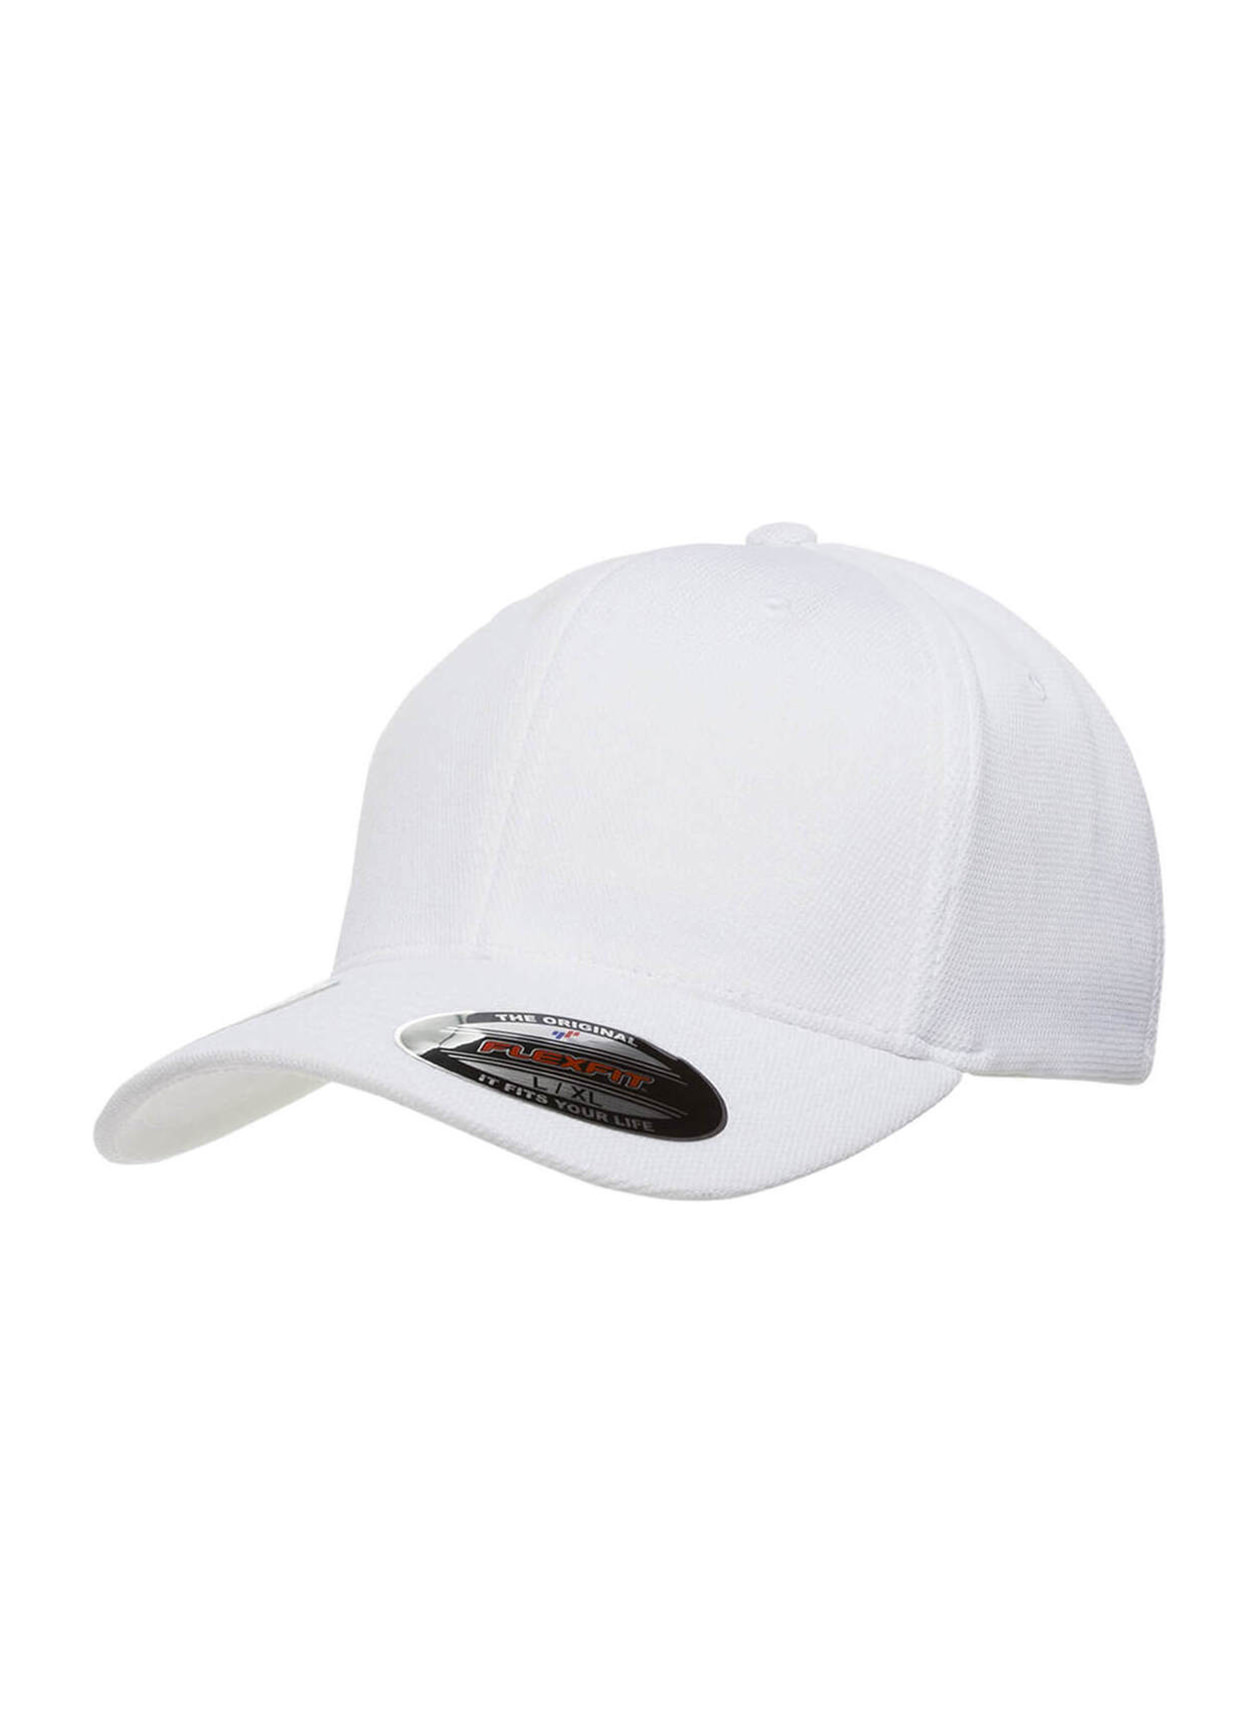 Flexfit White Cool & Dry Sport Hat